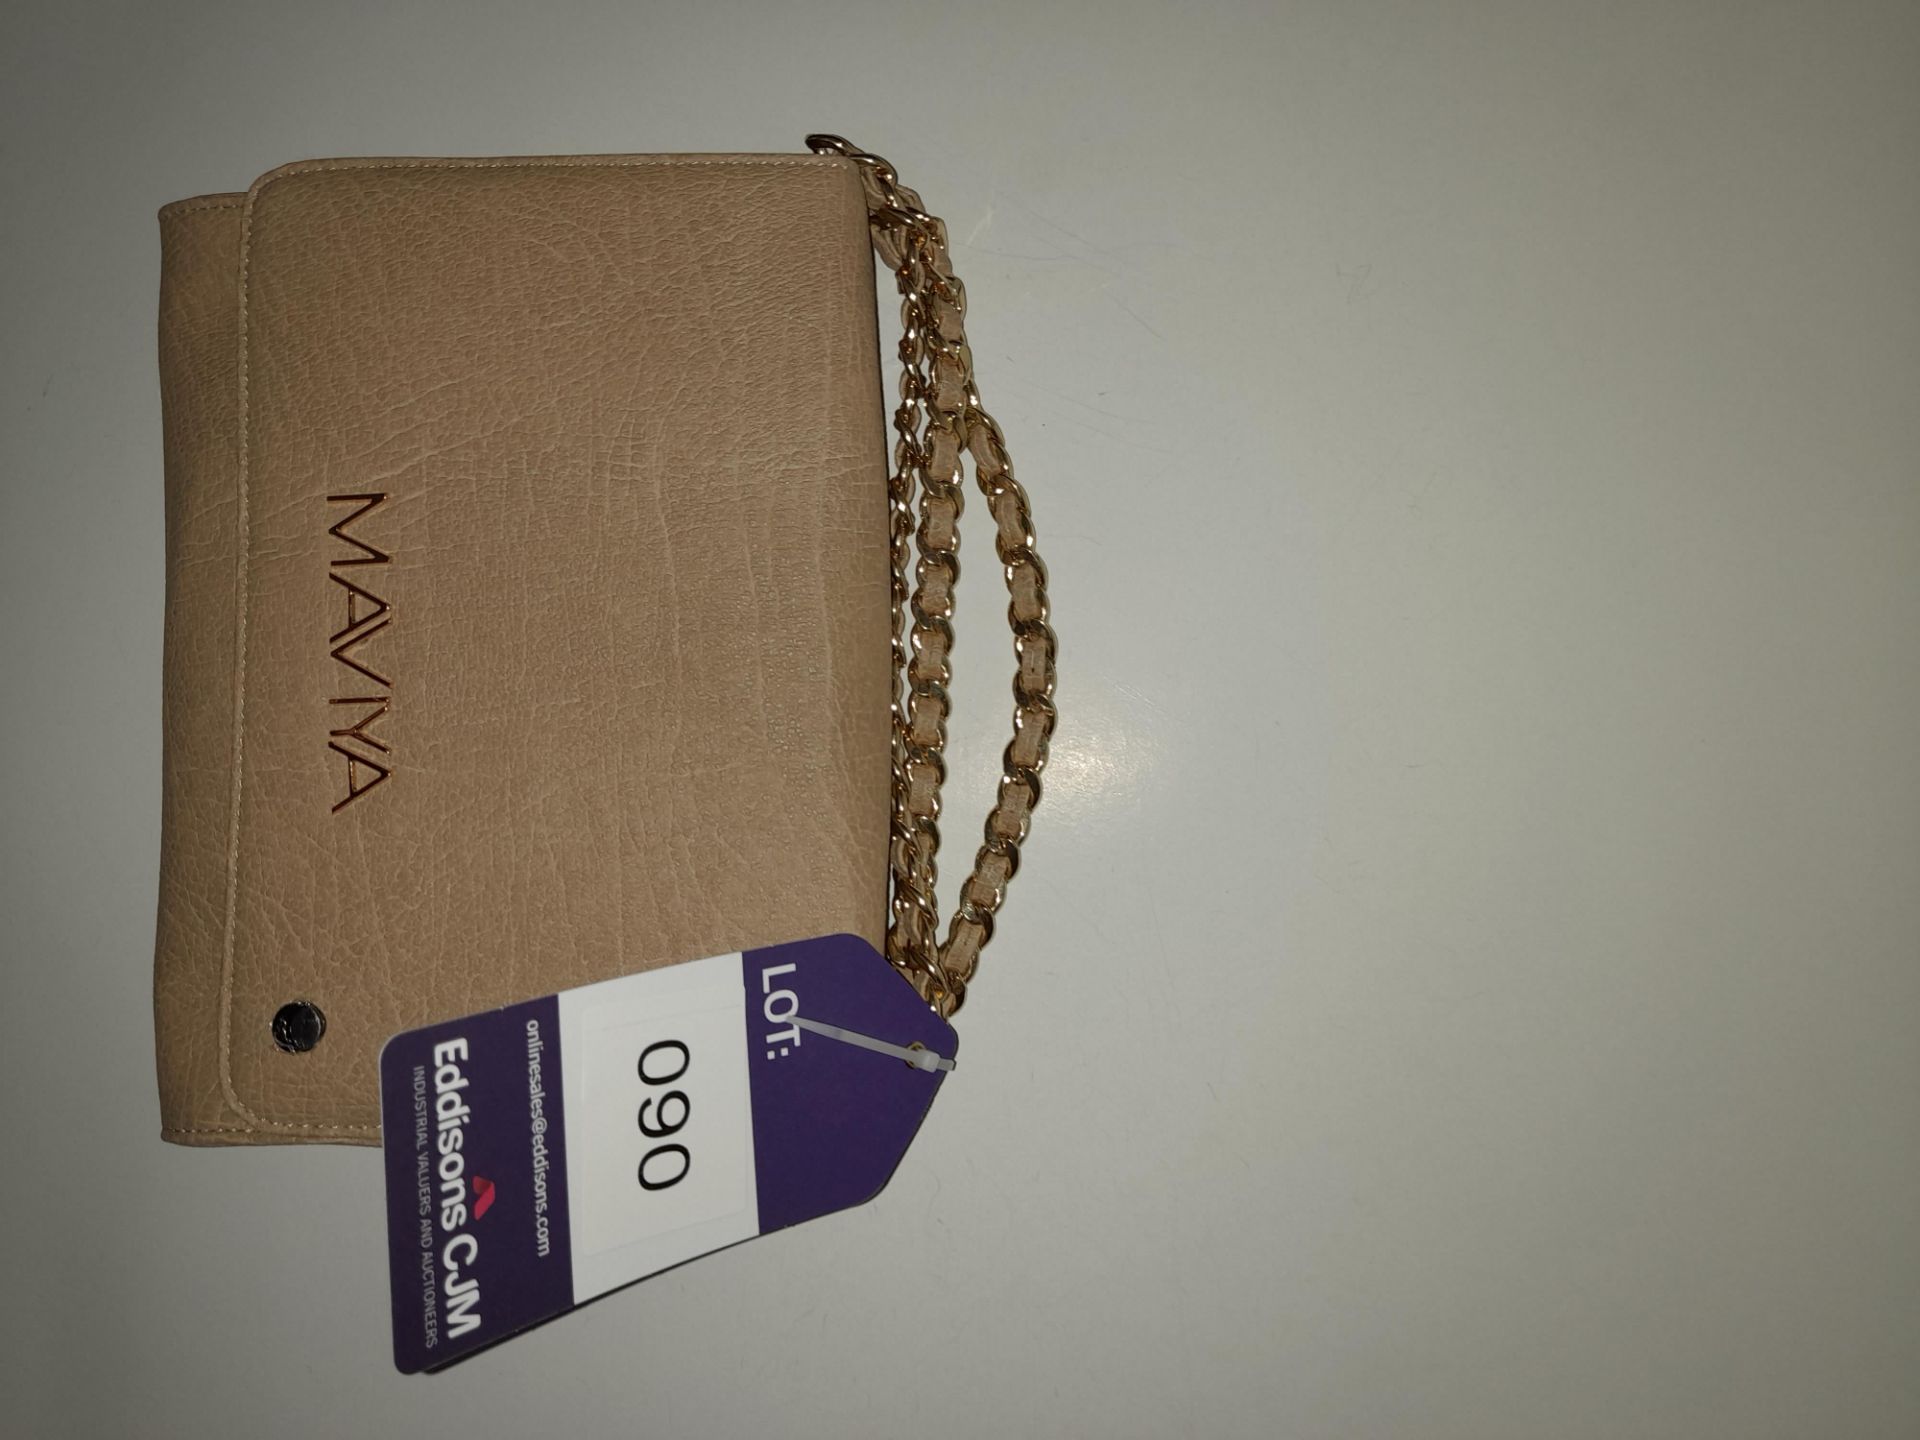 Maviya “Mannie” Mustard Vegan Italian Leather Evening Clutch Bag with Grained Finish, Faux Suede